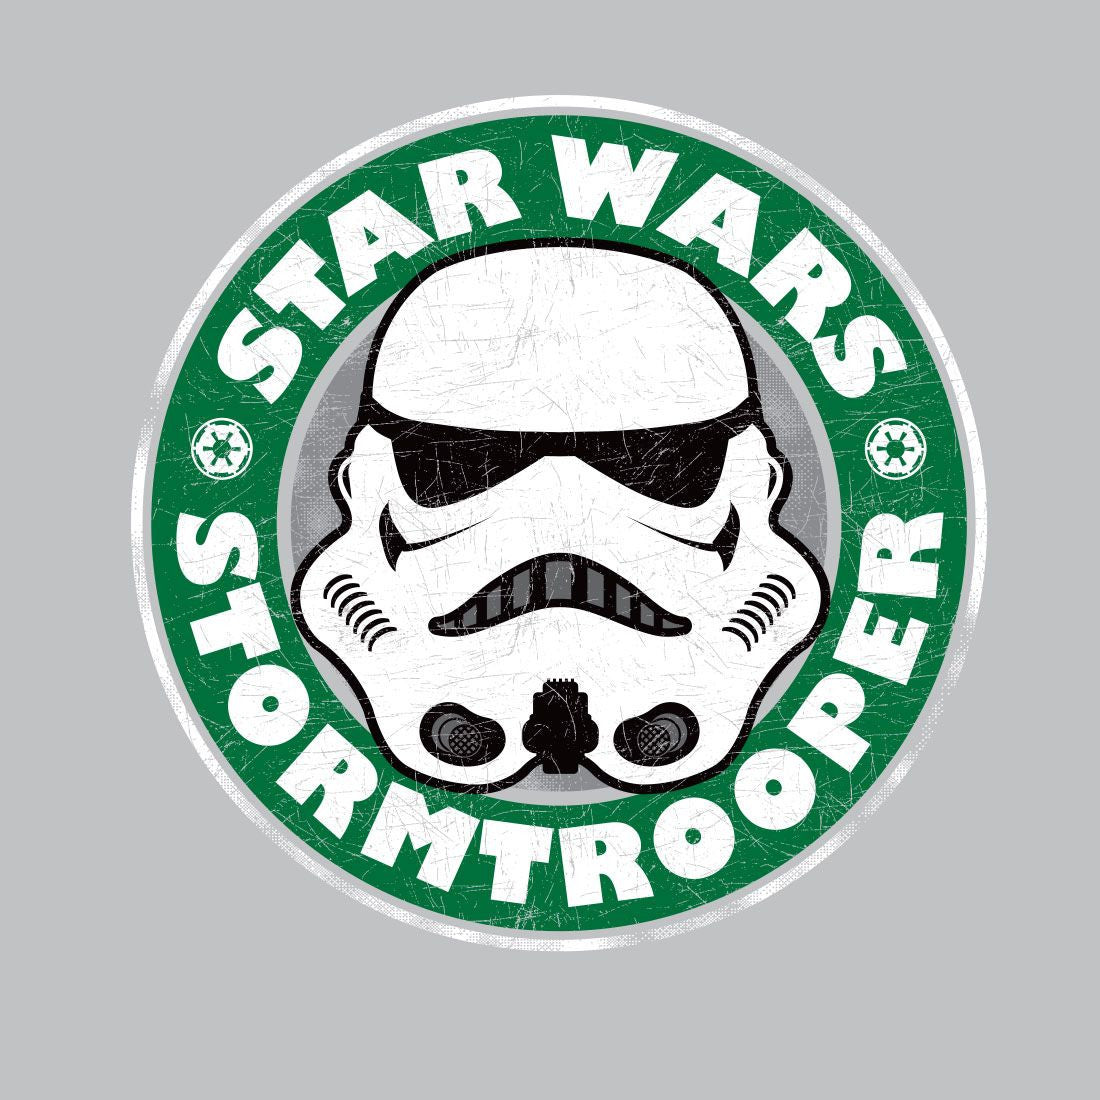 T-shirt Enfant Star Wars - Stormtrooper Coffee